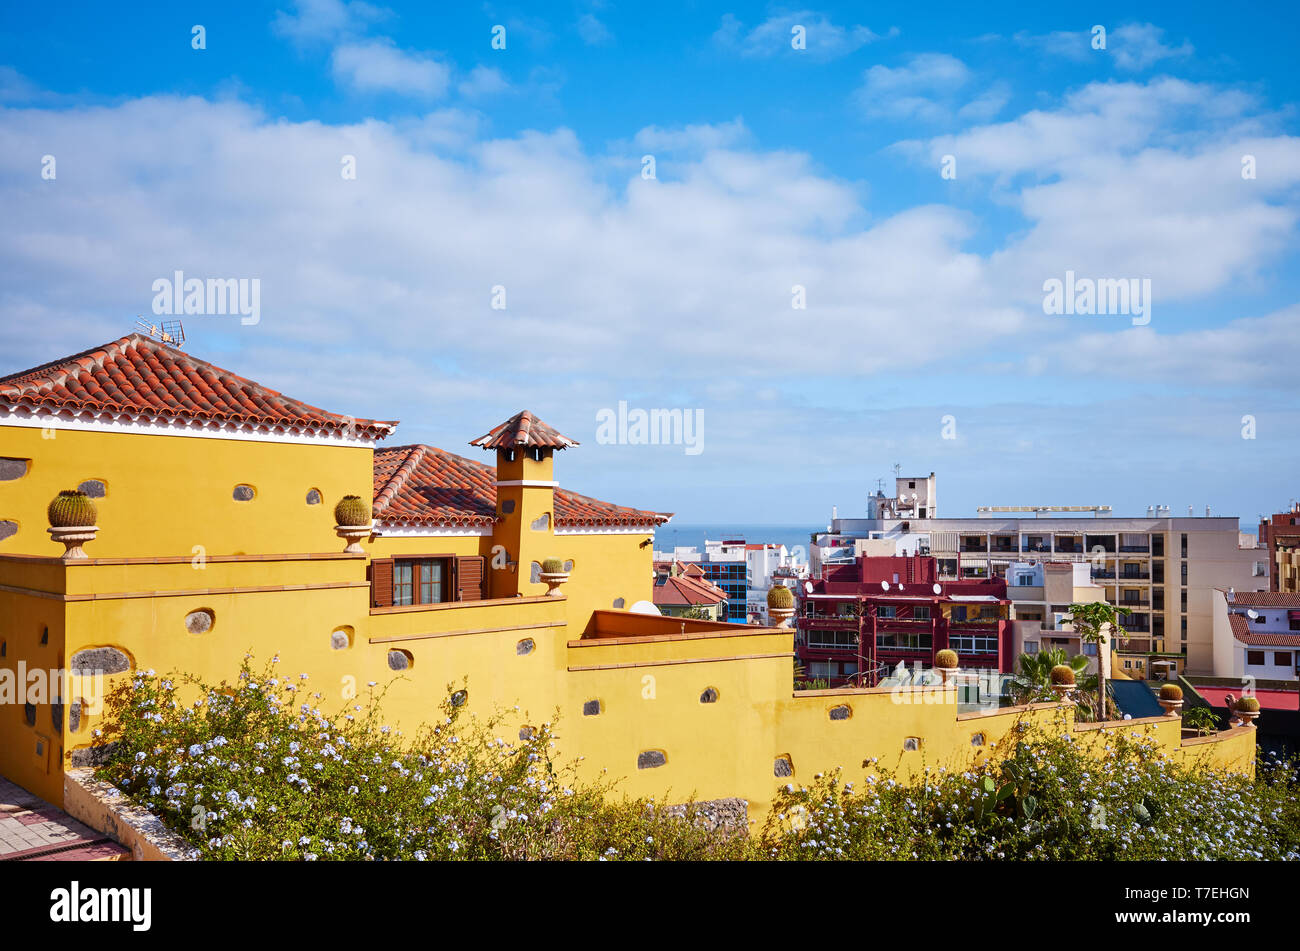 Puerto de la Cruz Stadt Architektur, Teneriffa, Kanarische Inseln, Spanien. Stockfoto